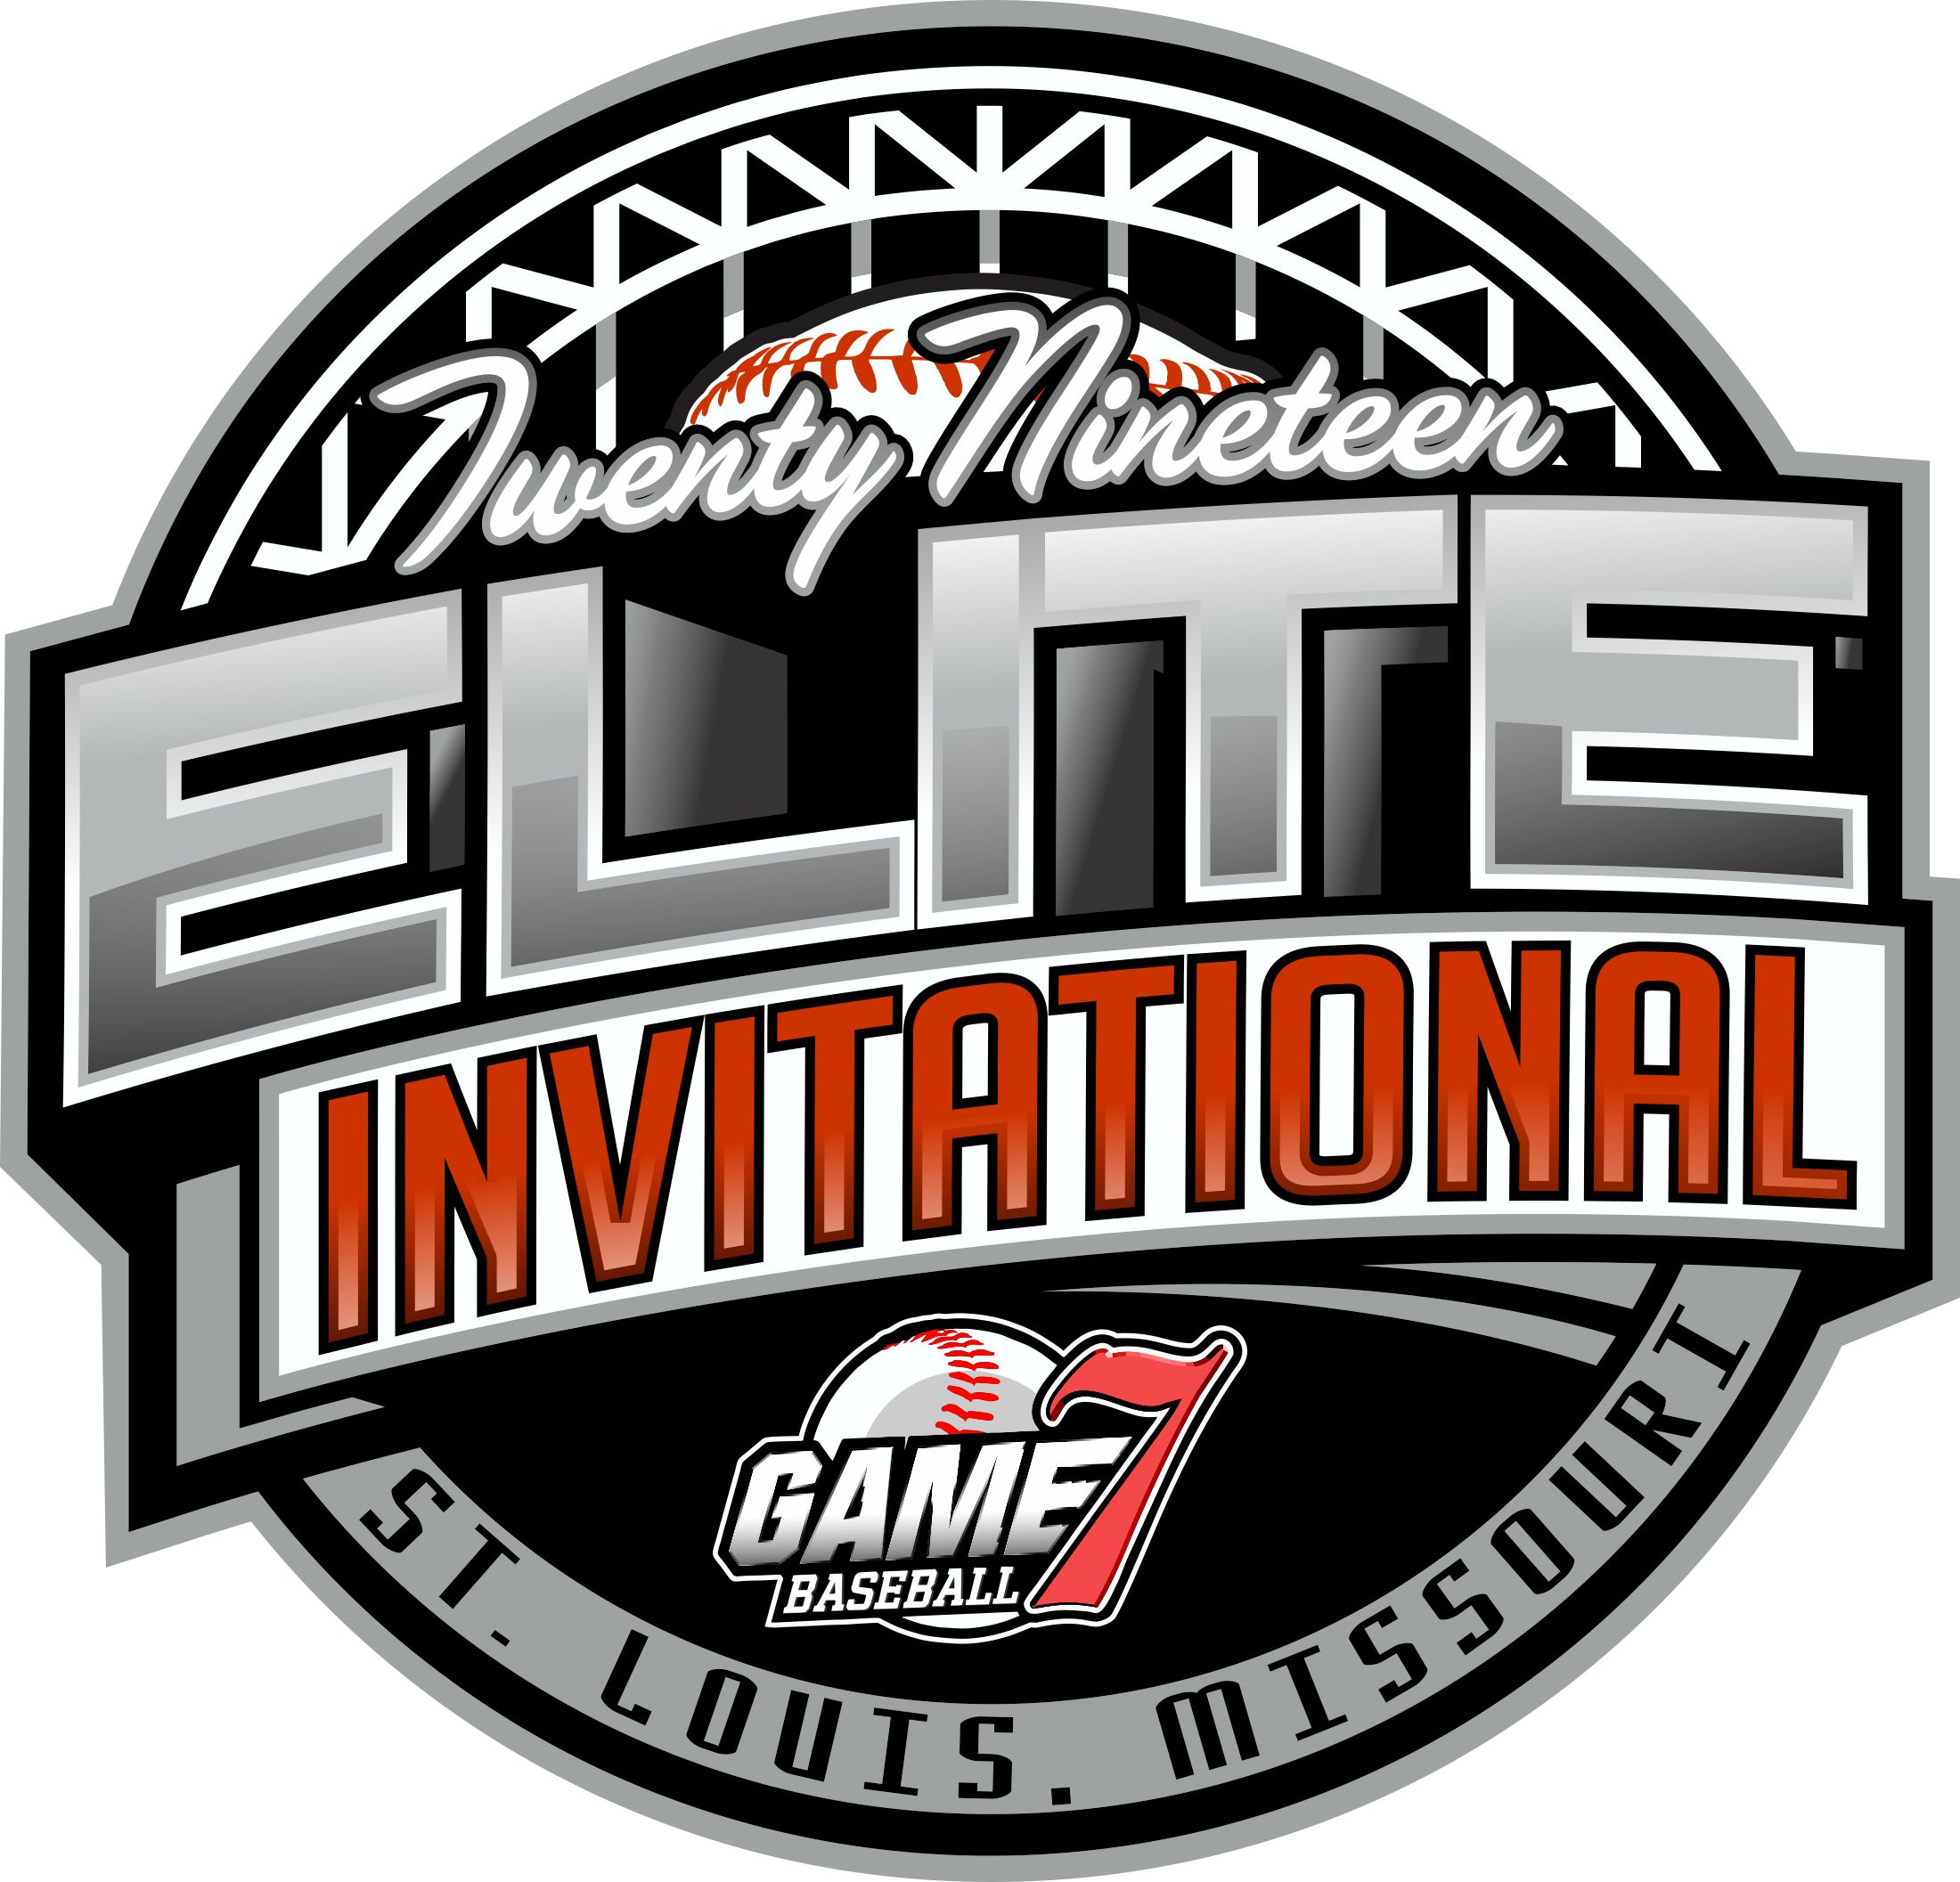 Elite 12U Invitational powered by New Melle Tigers Logo